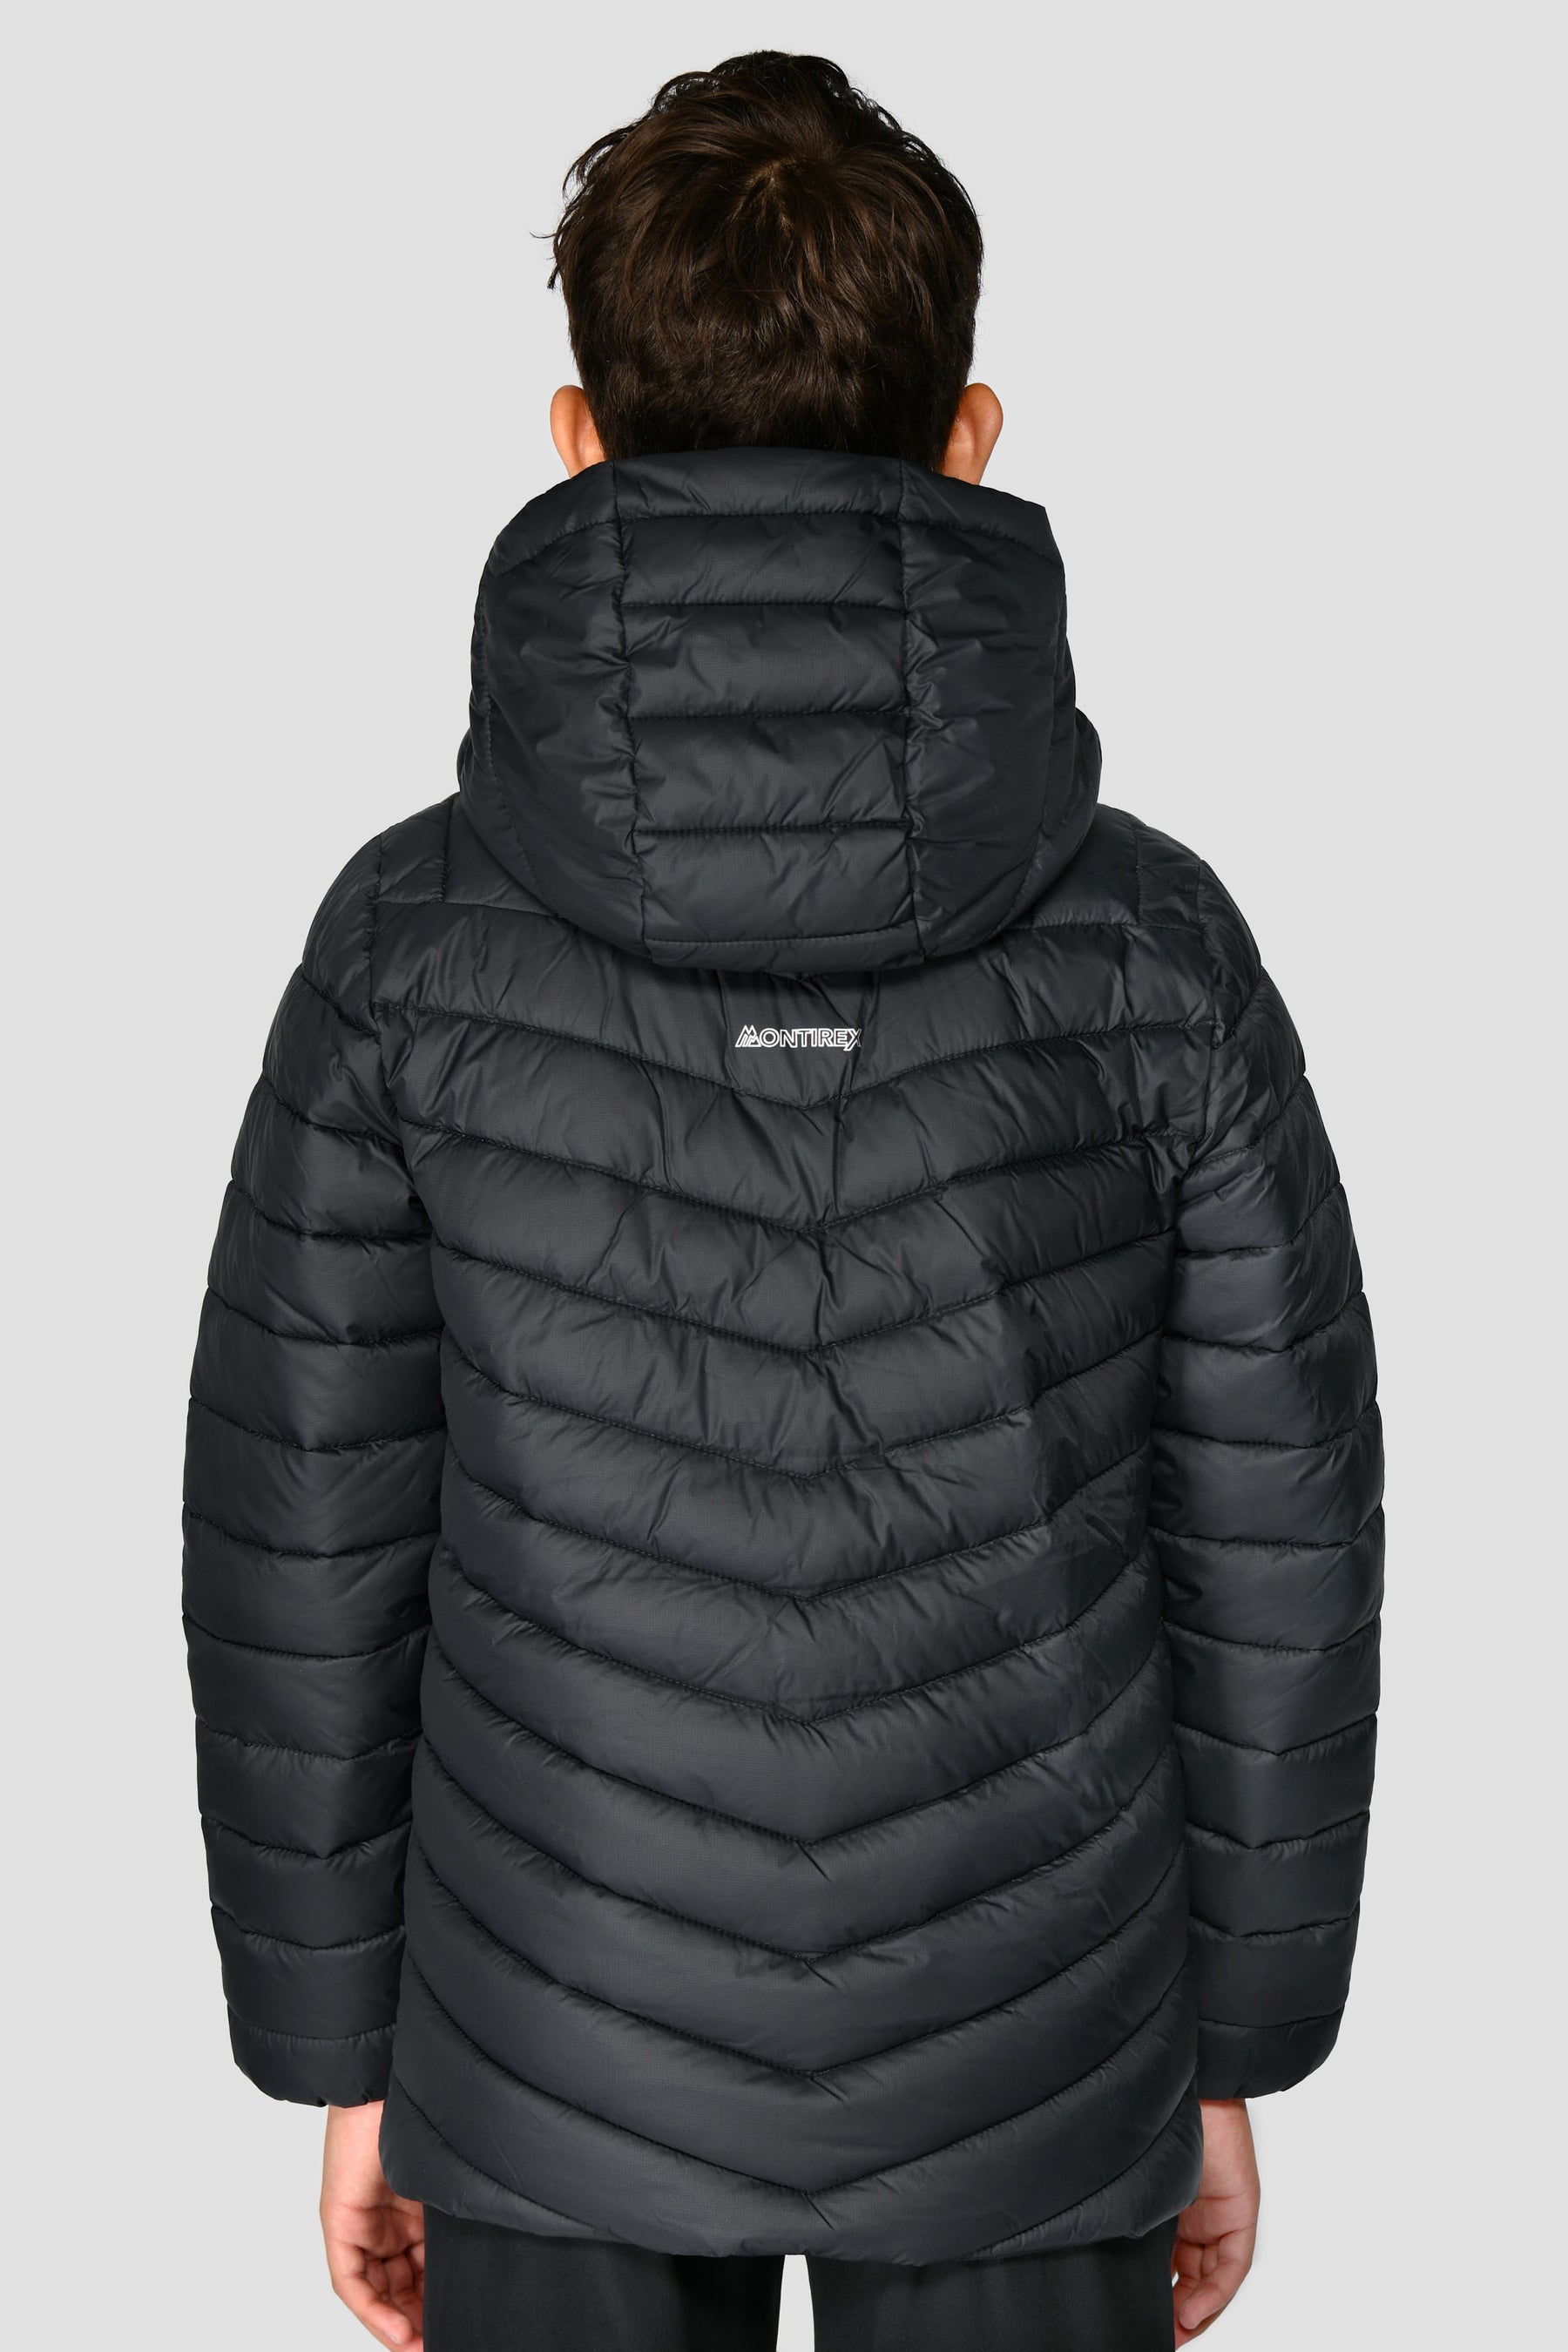 Junior Avalanche Jacket - Black